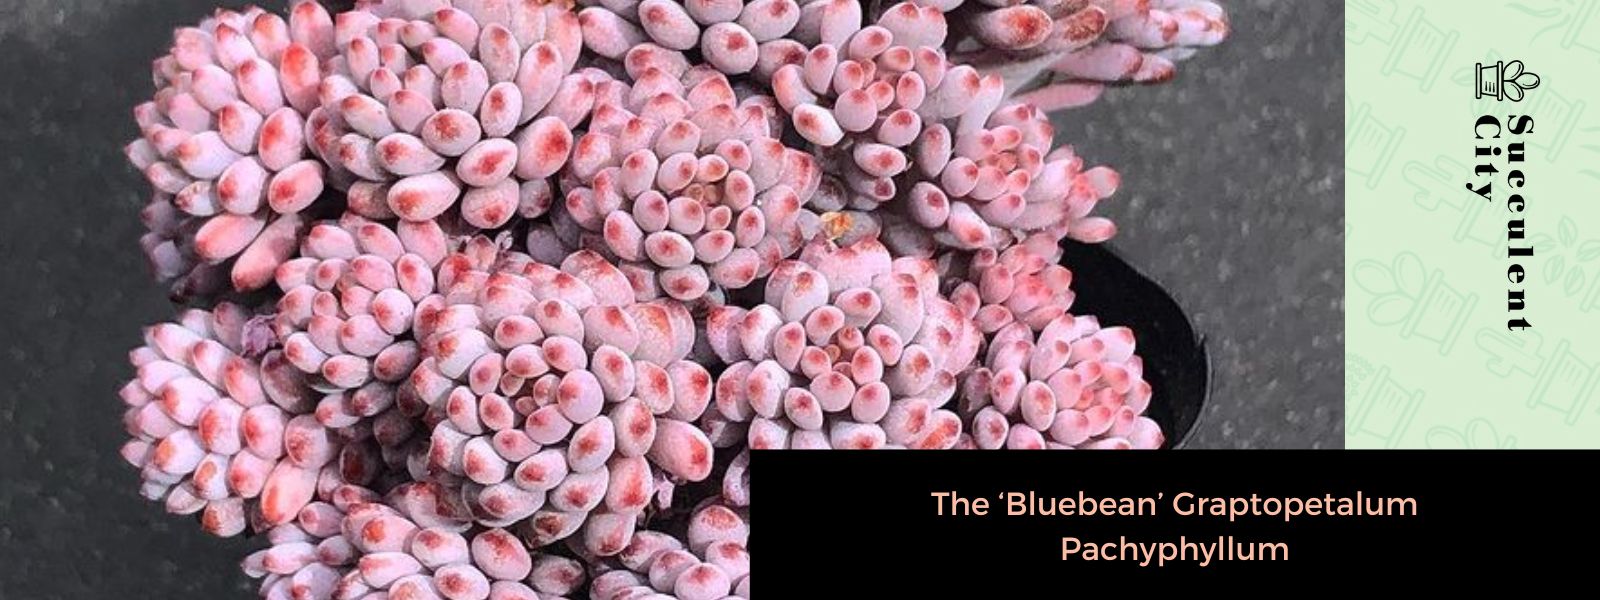 El “frijol azul” Graptopetalum Pachyphyllum